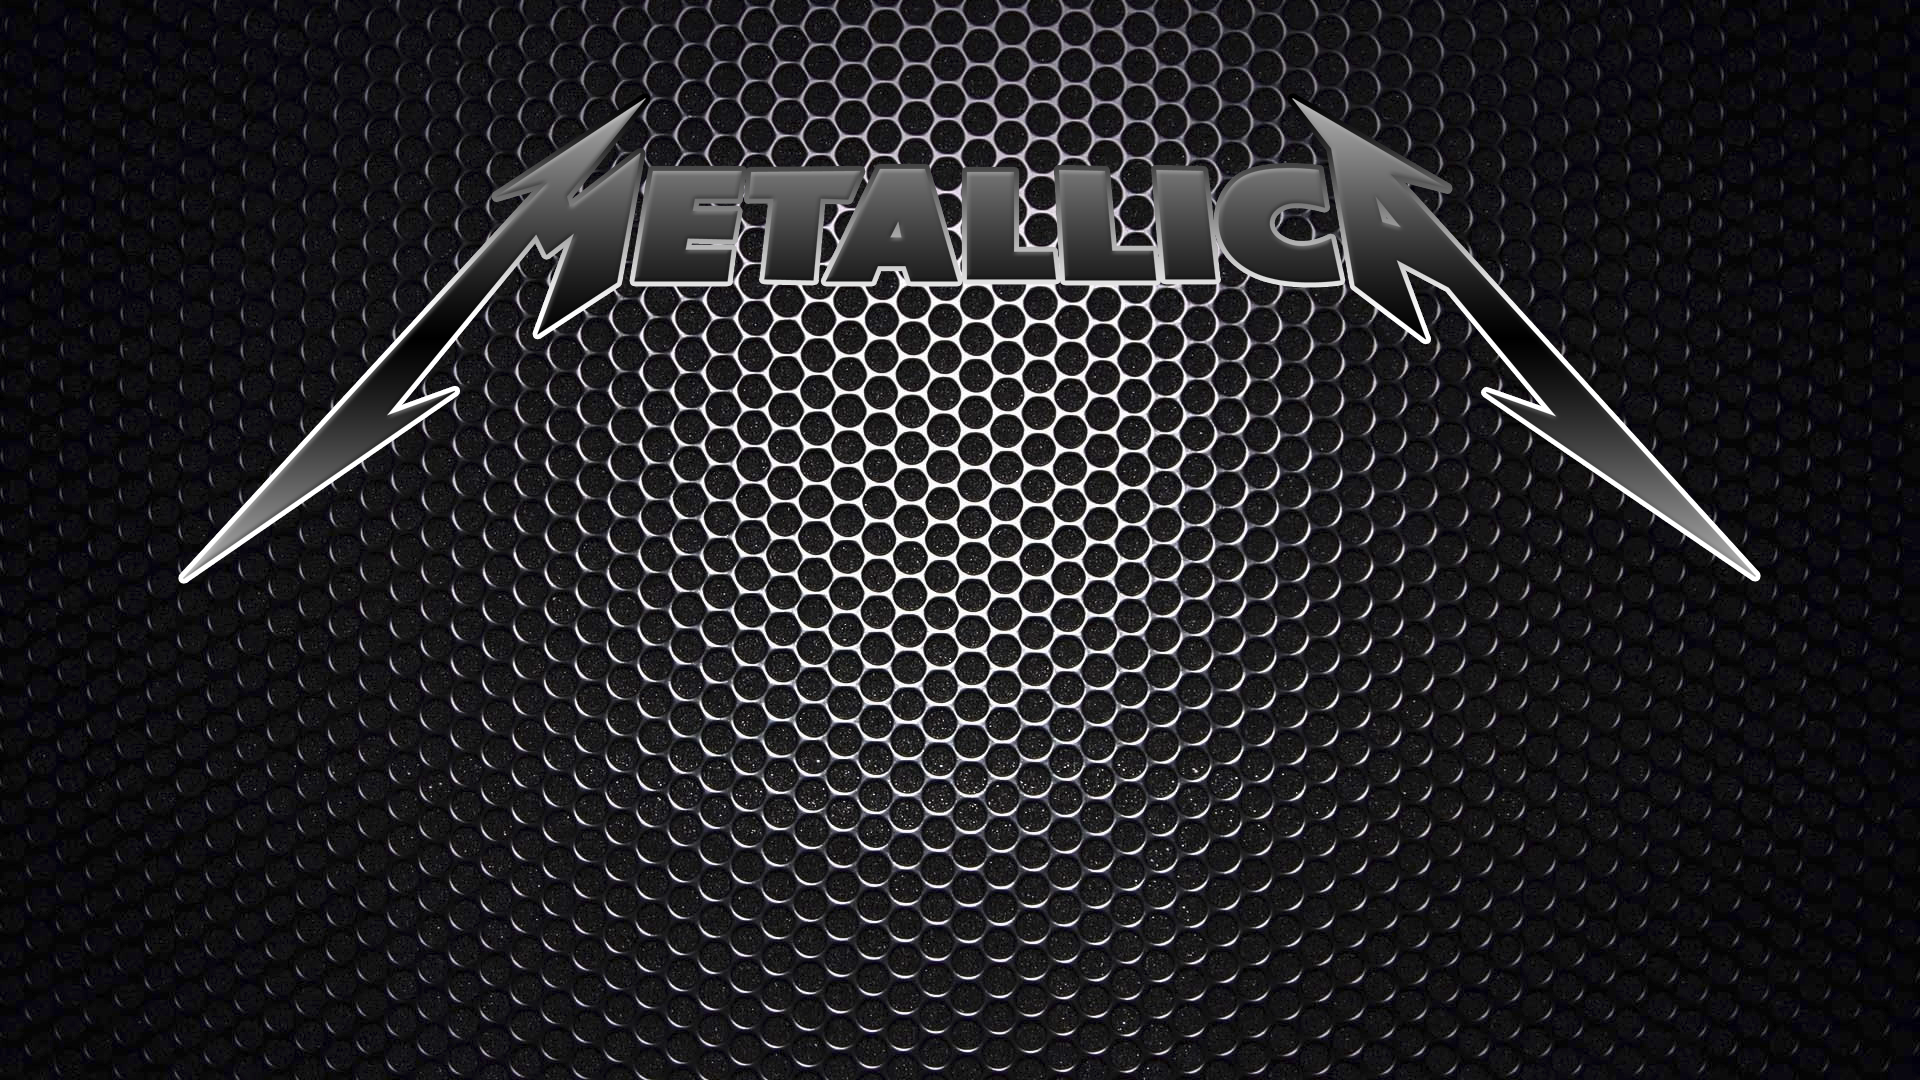 Metallica Black Grid Wallpaper By Emfotografia